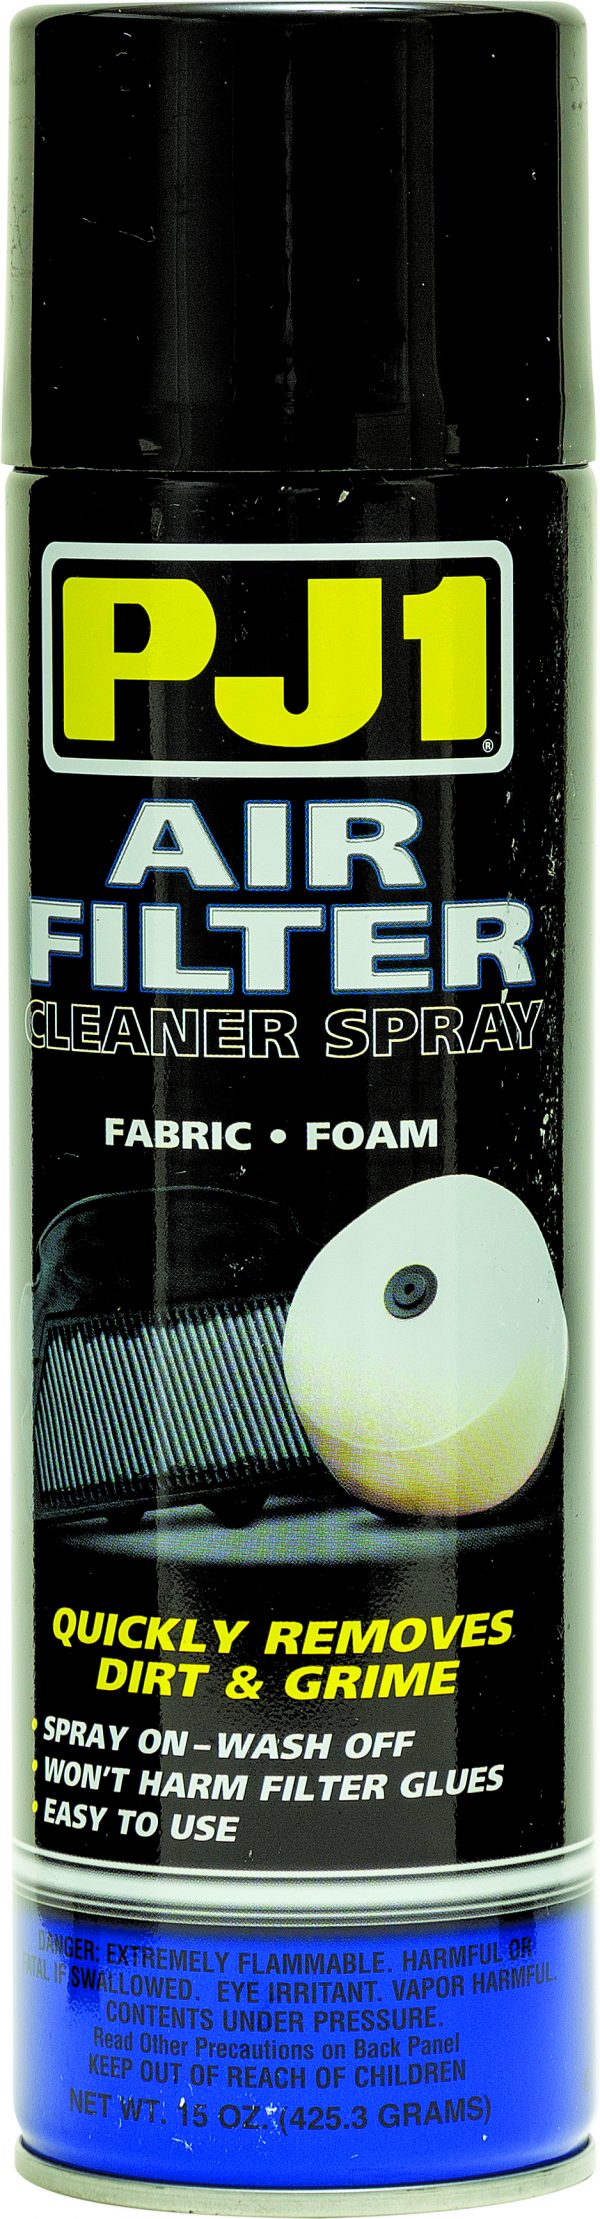 Foam Filter Cleaner Image